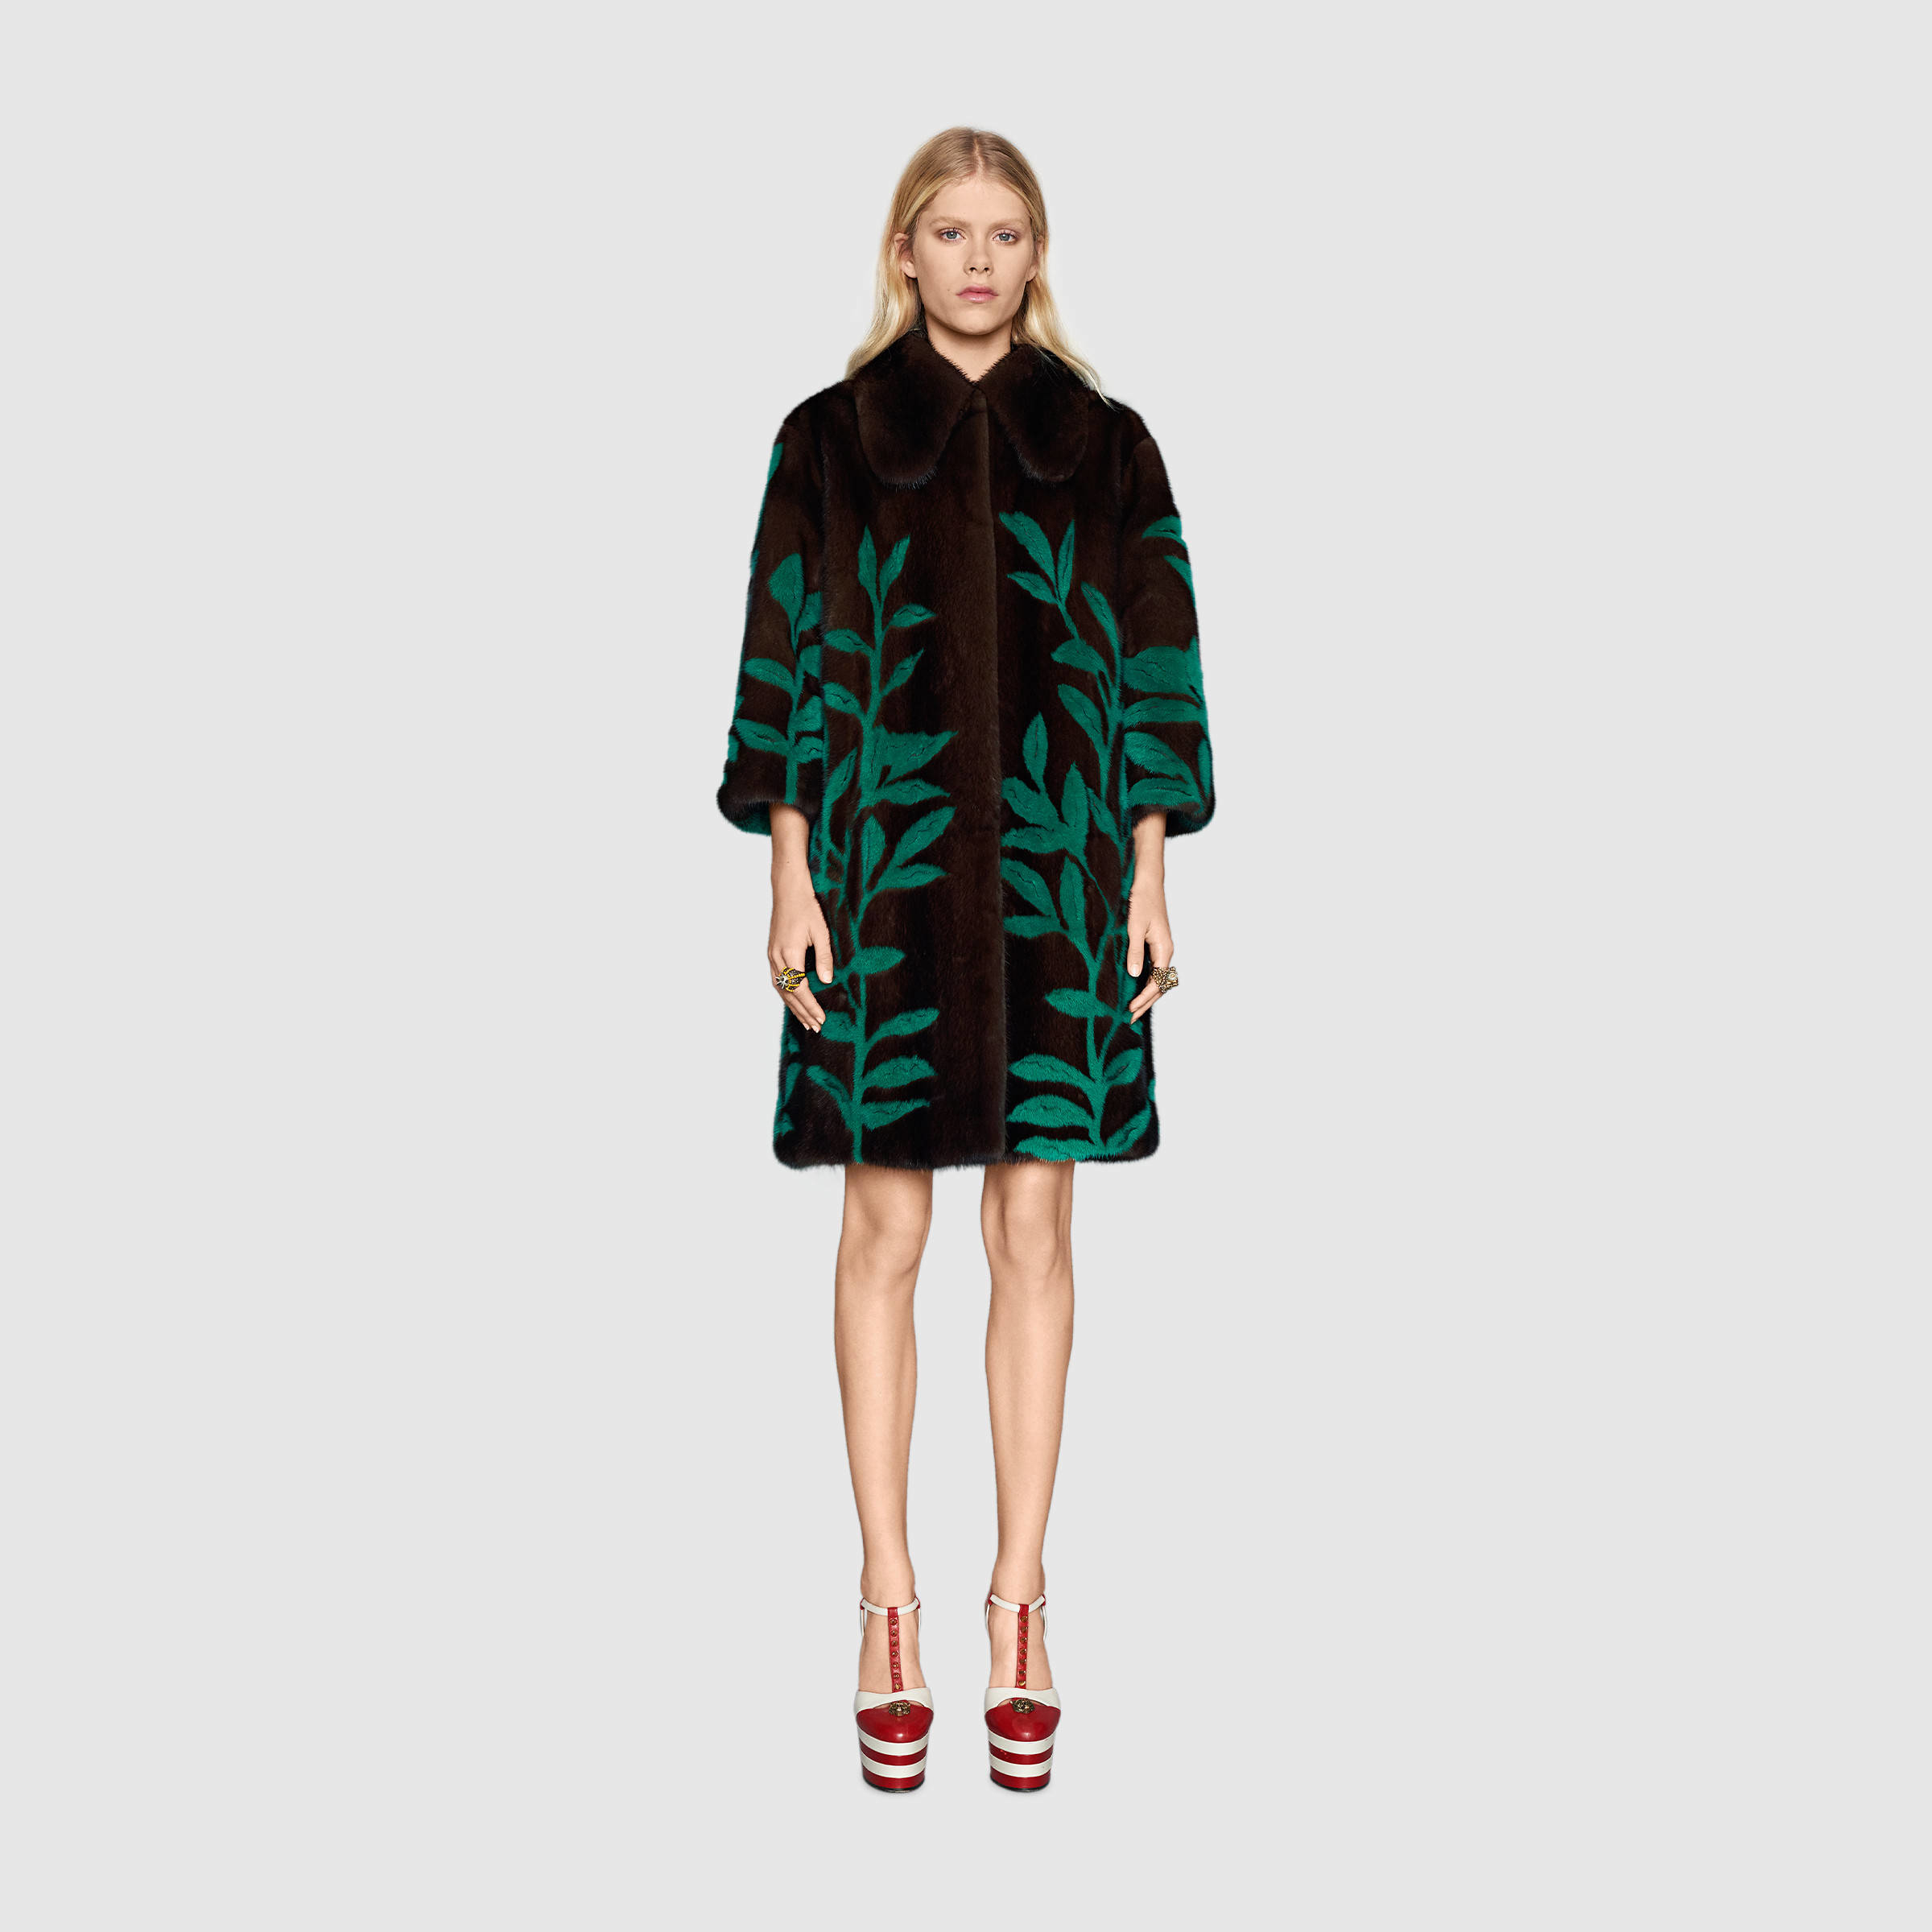 Gucci Leaf Intarsia Mink Fur Coat in Brown - Lyst